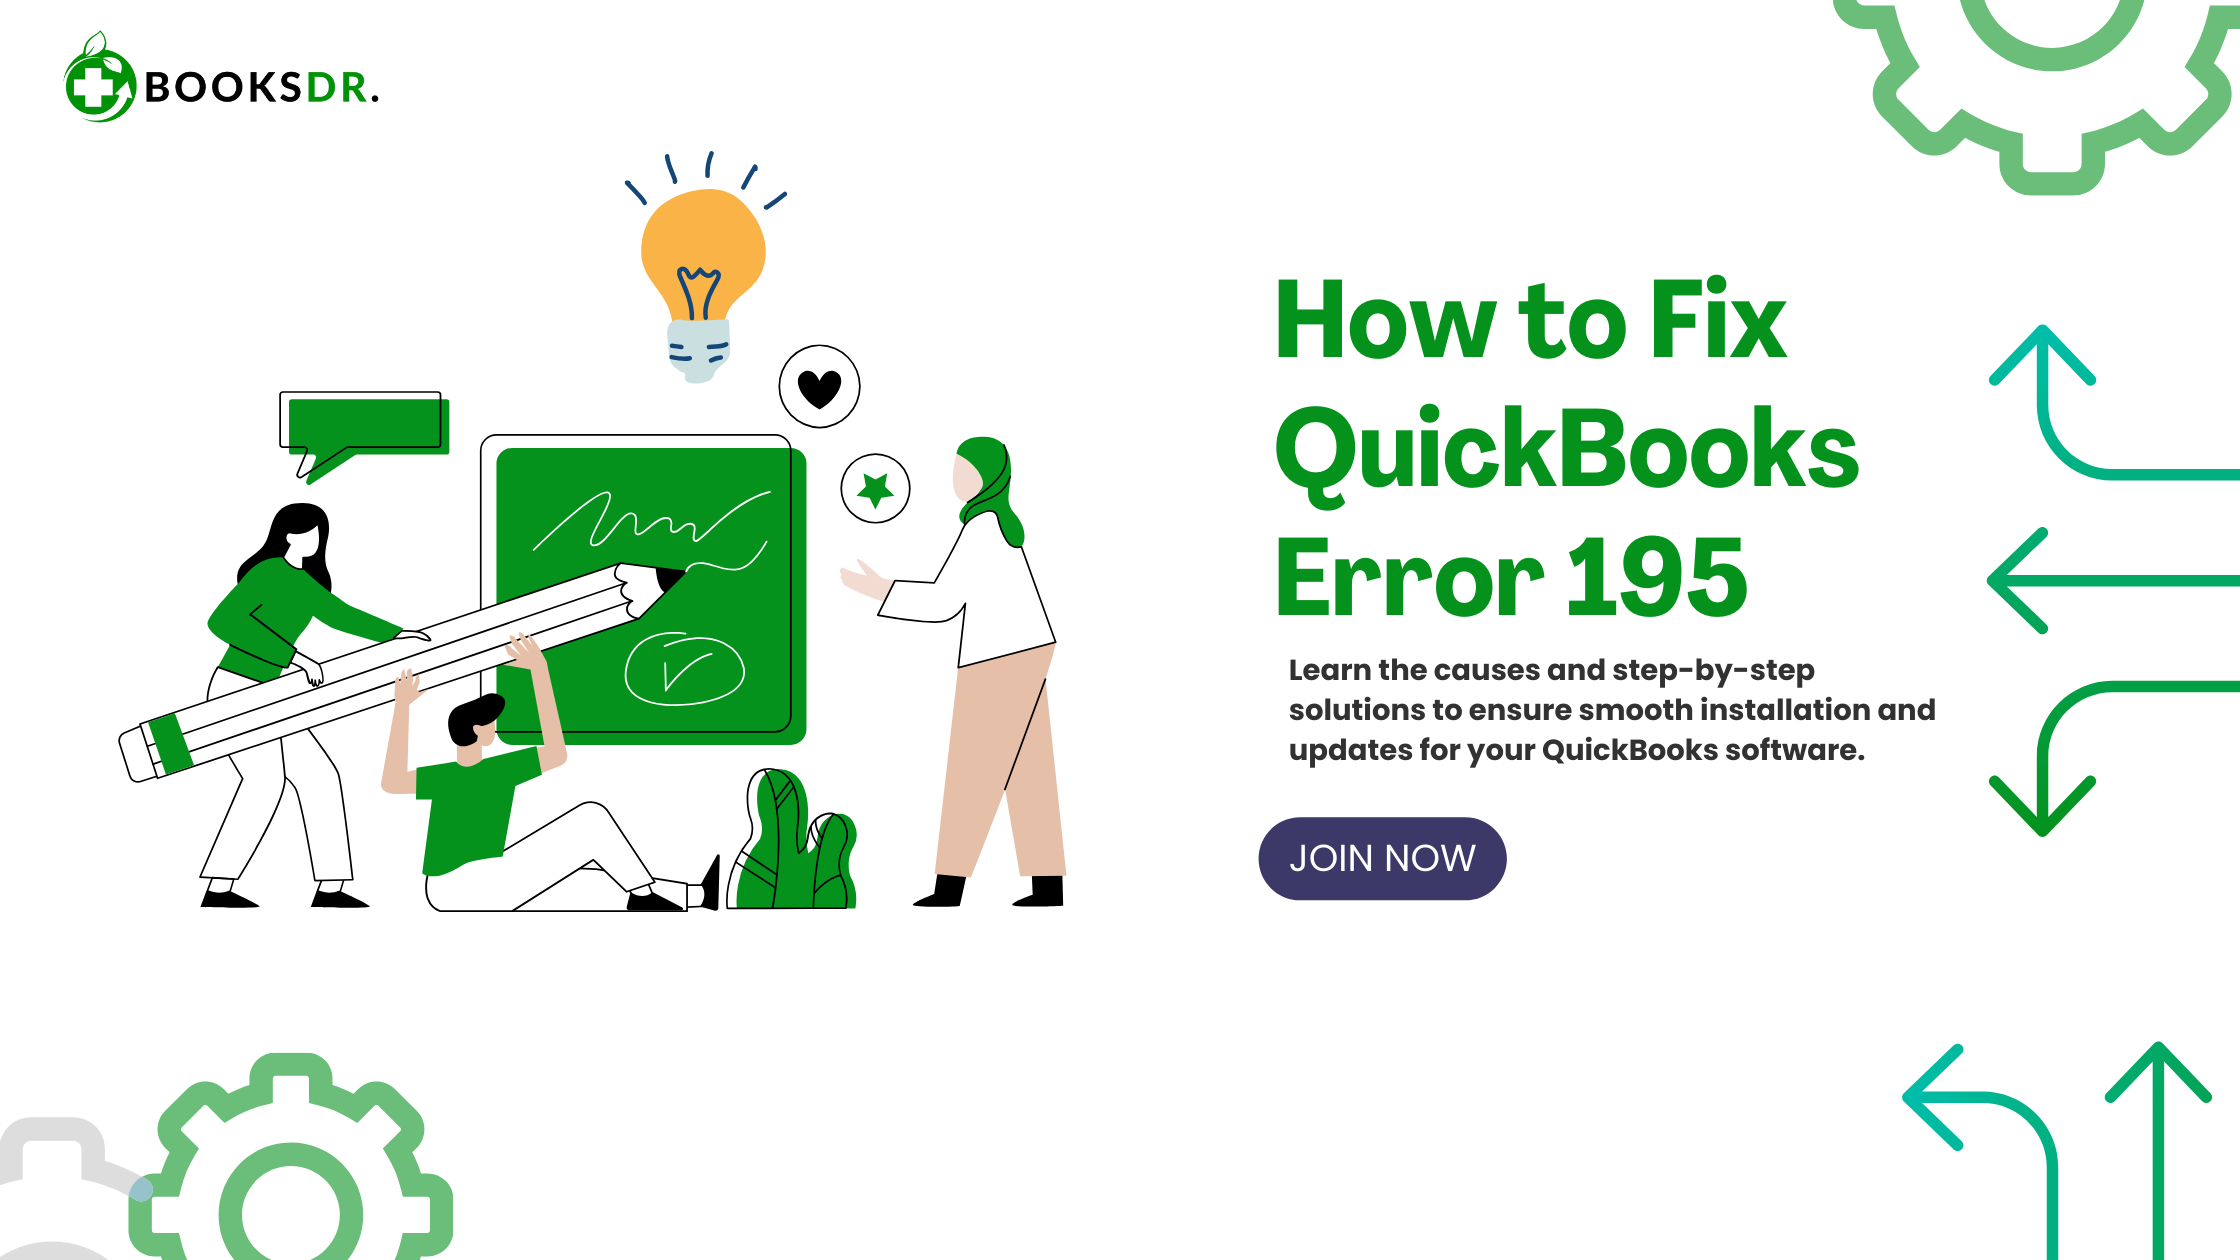 How to Fix QuickBooks Error 195